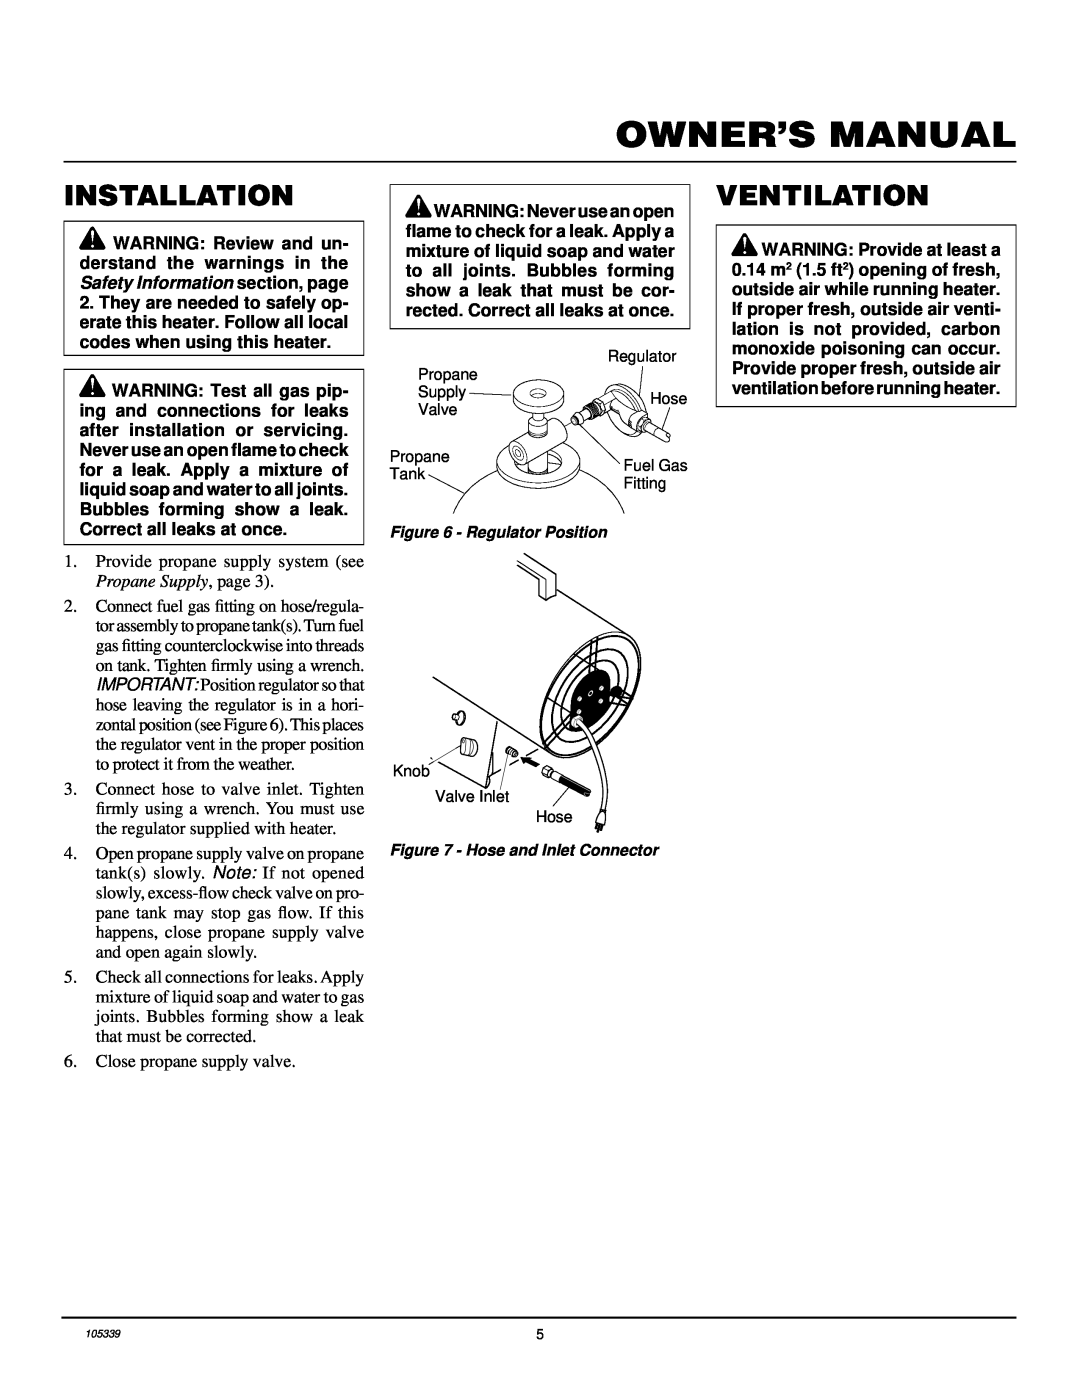 Desa RCLP50VA owner manual Installation, Ventilation, WARNING Provide at least a 